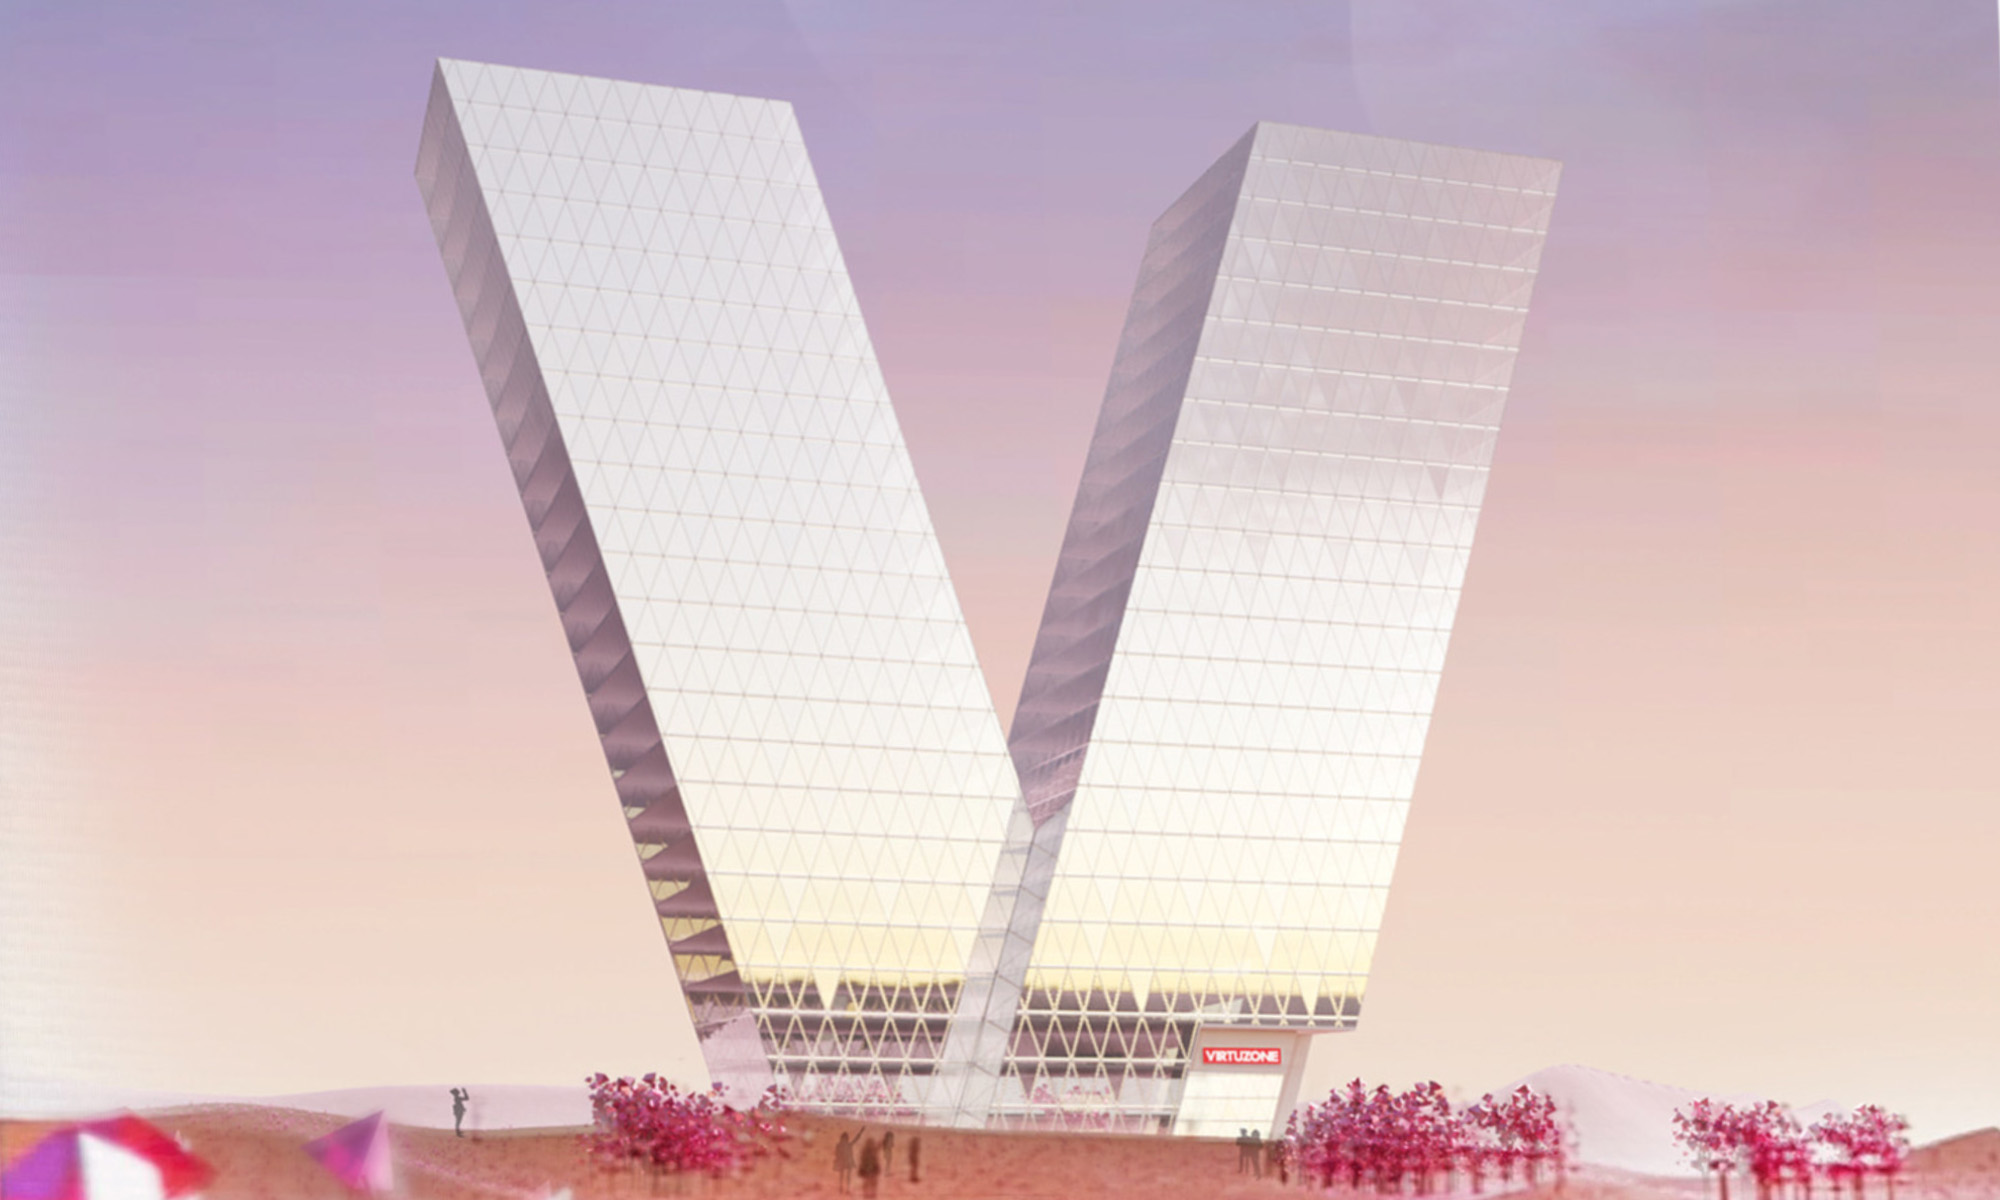 virtuzone plans to build v-shaped metaverse skyscraper